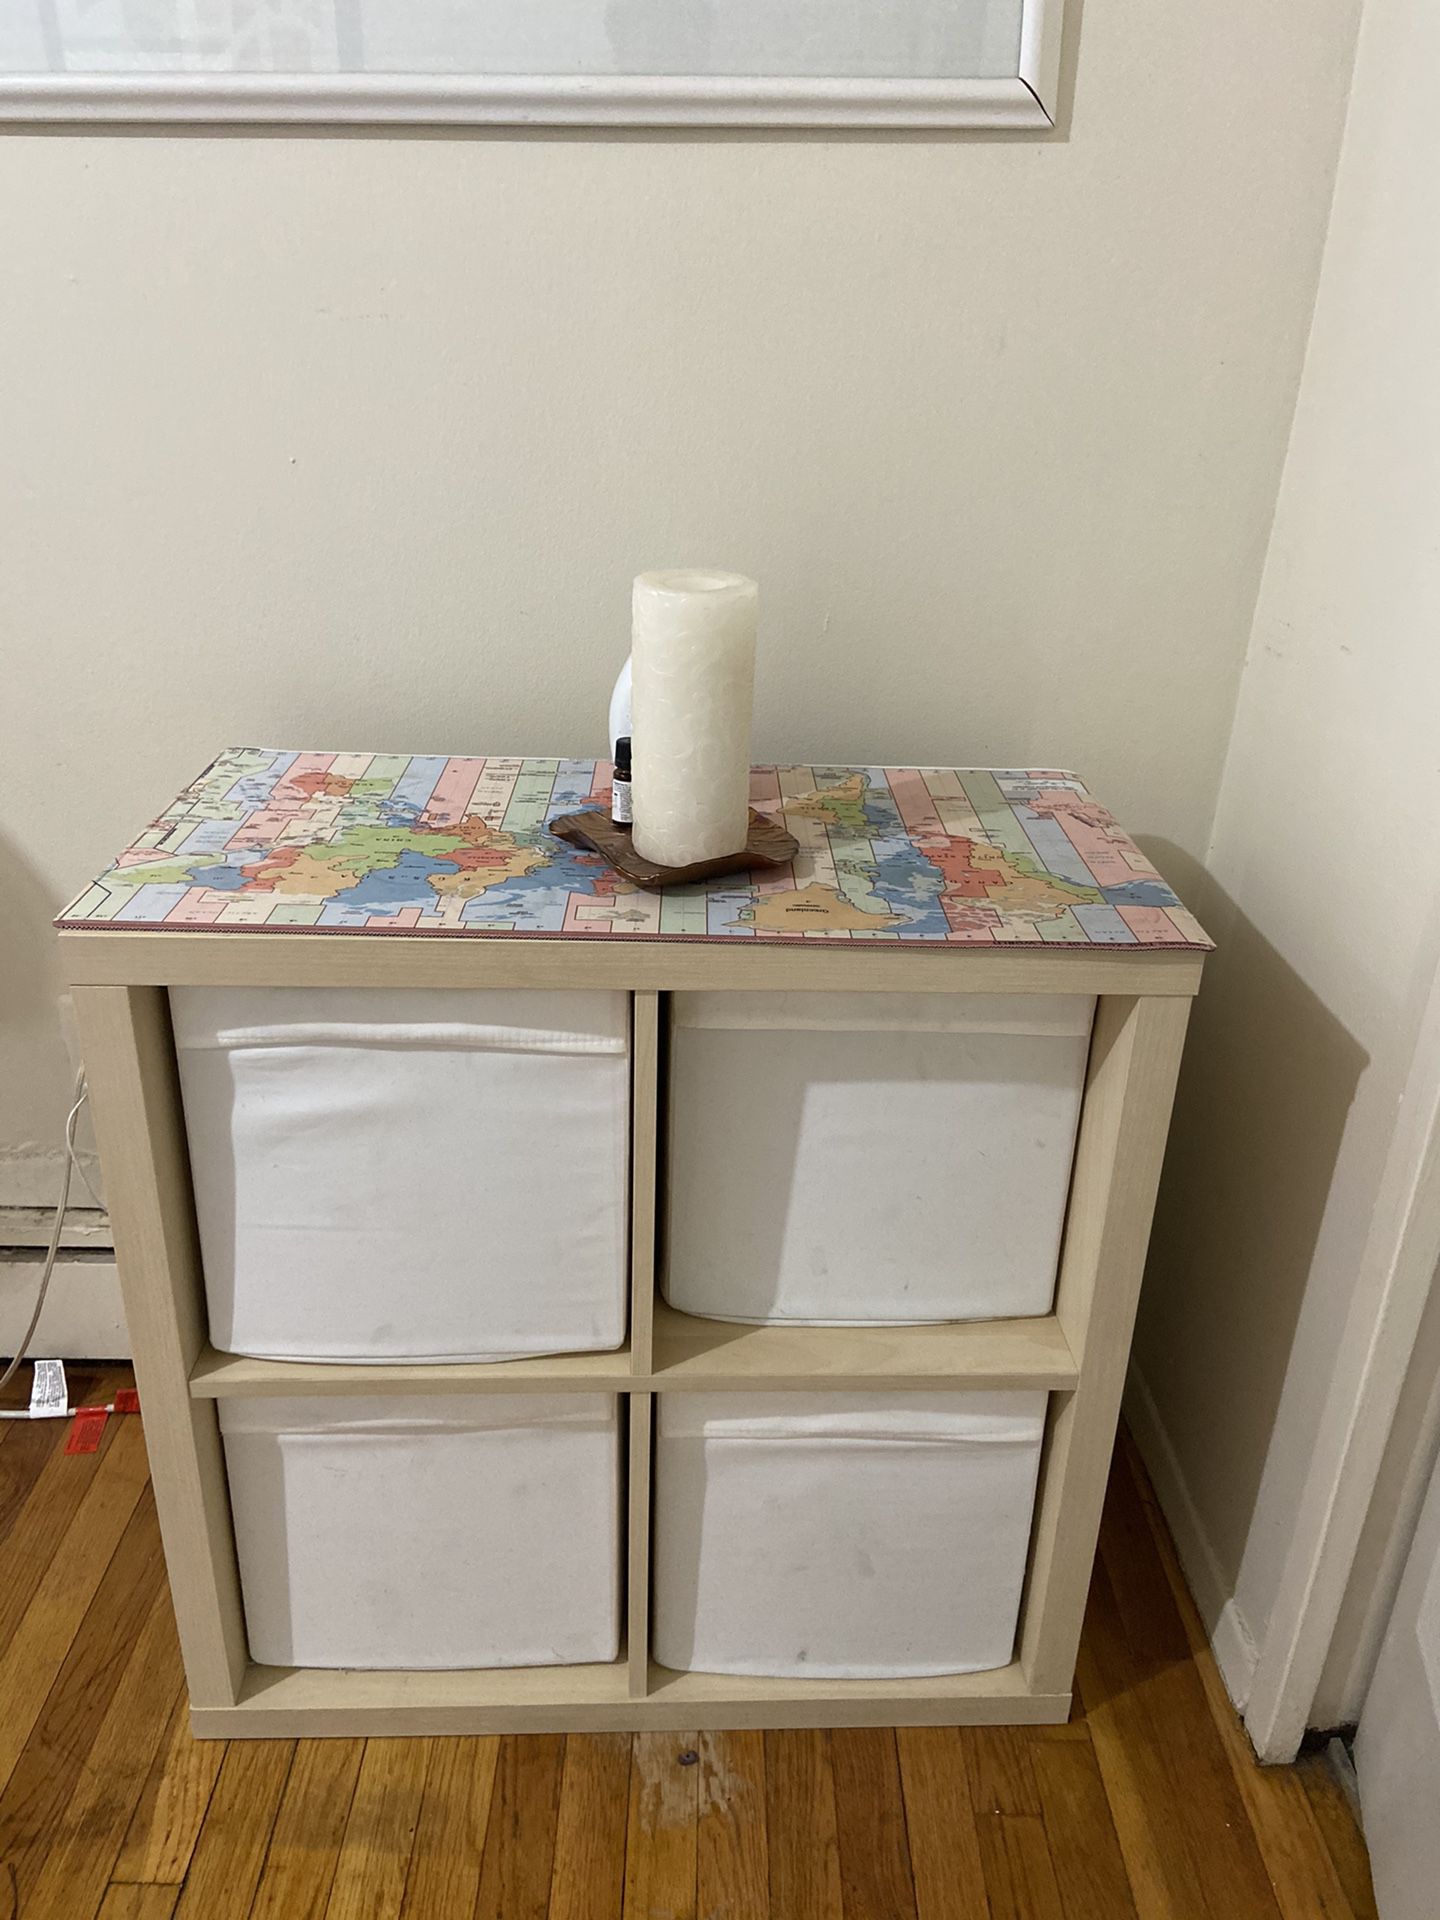 Cube storage cubbies with 4 white storage bins